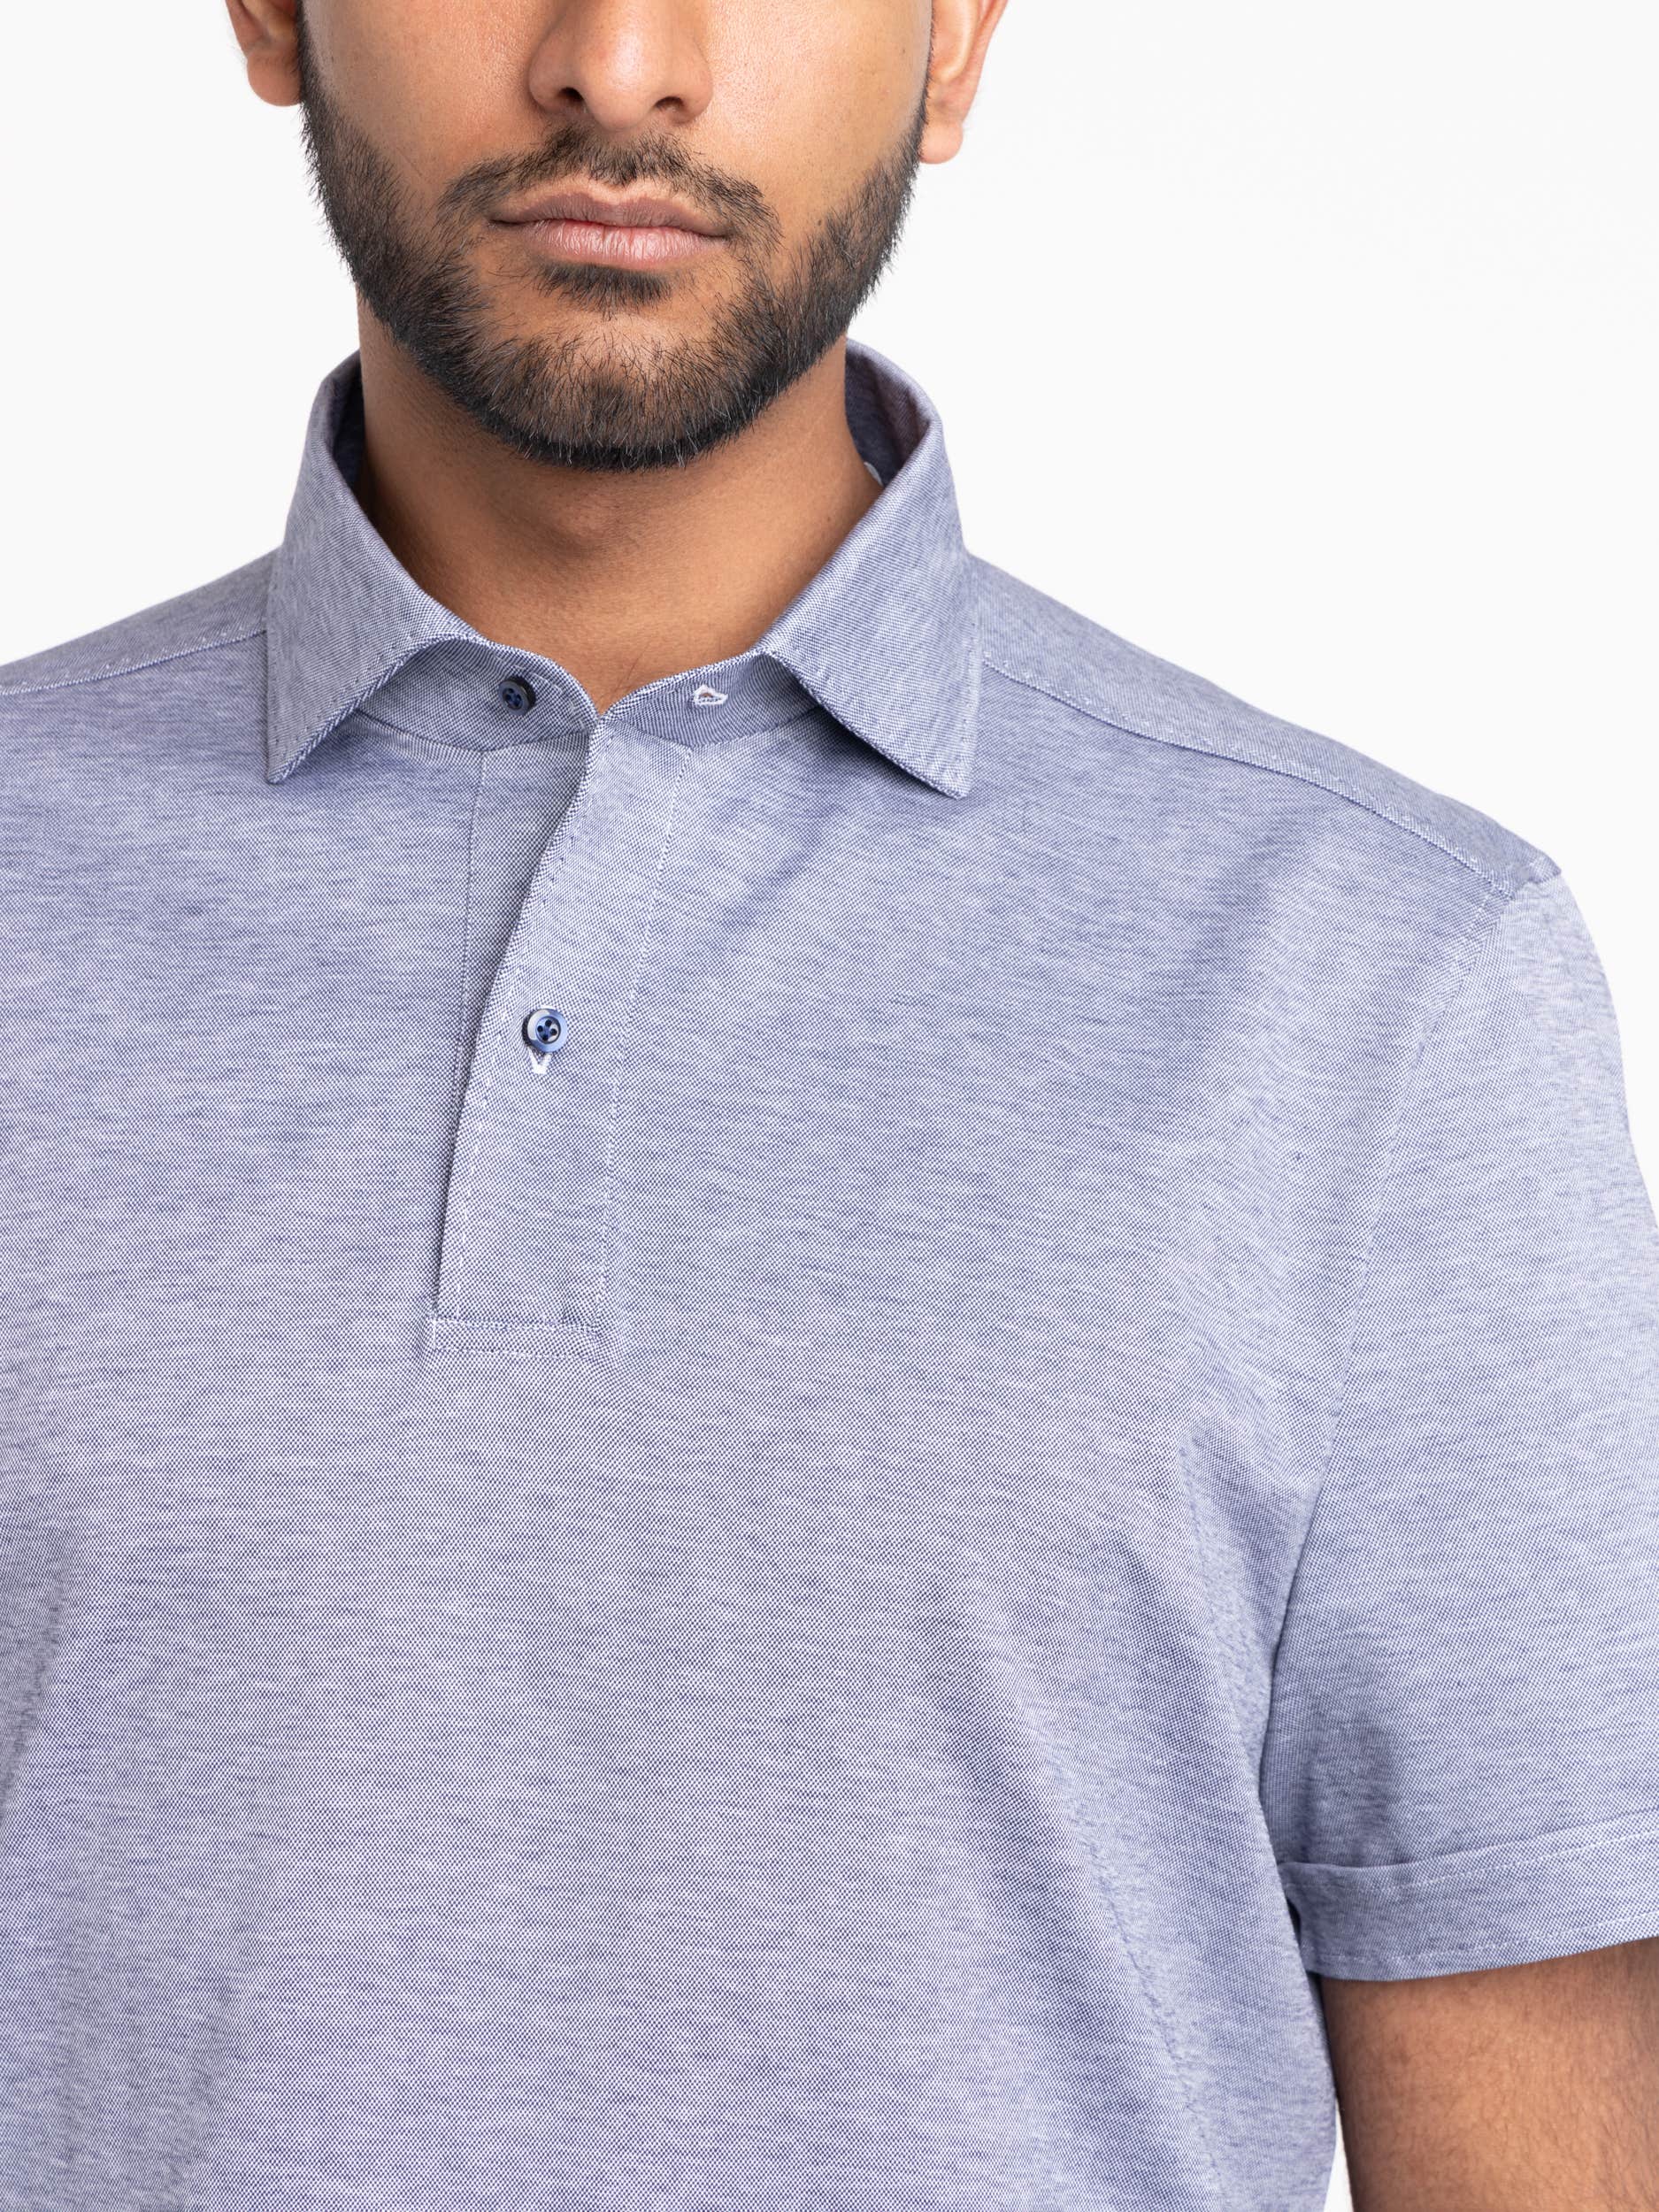 Blue Jersey Short Sleeve Polo Shirt